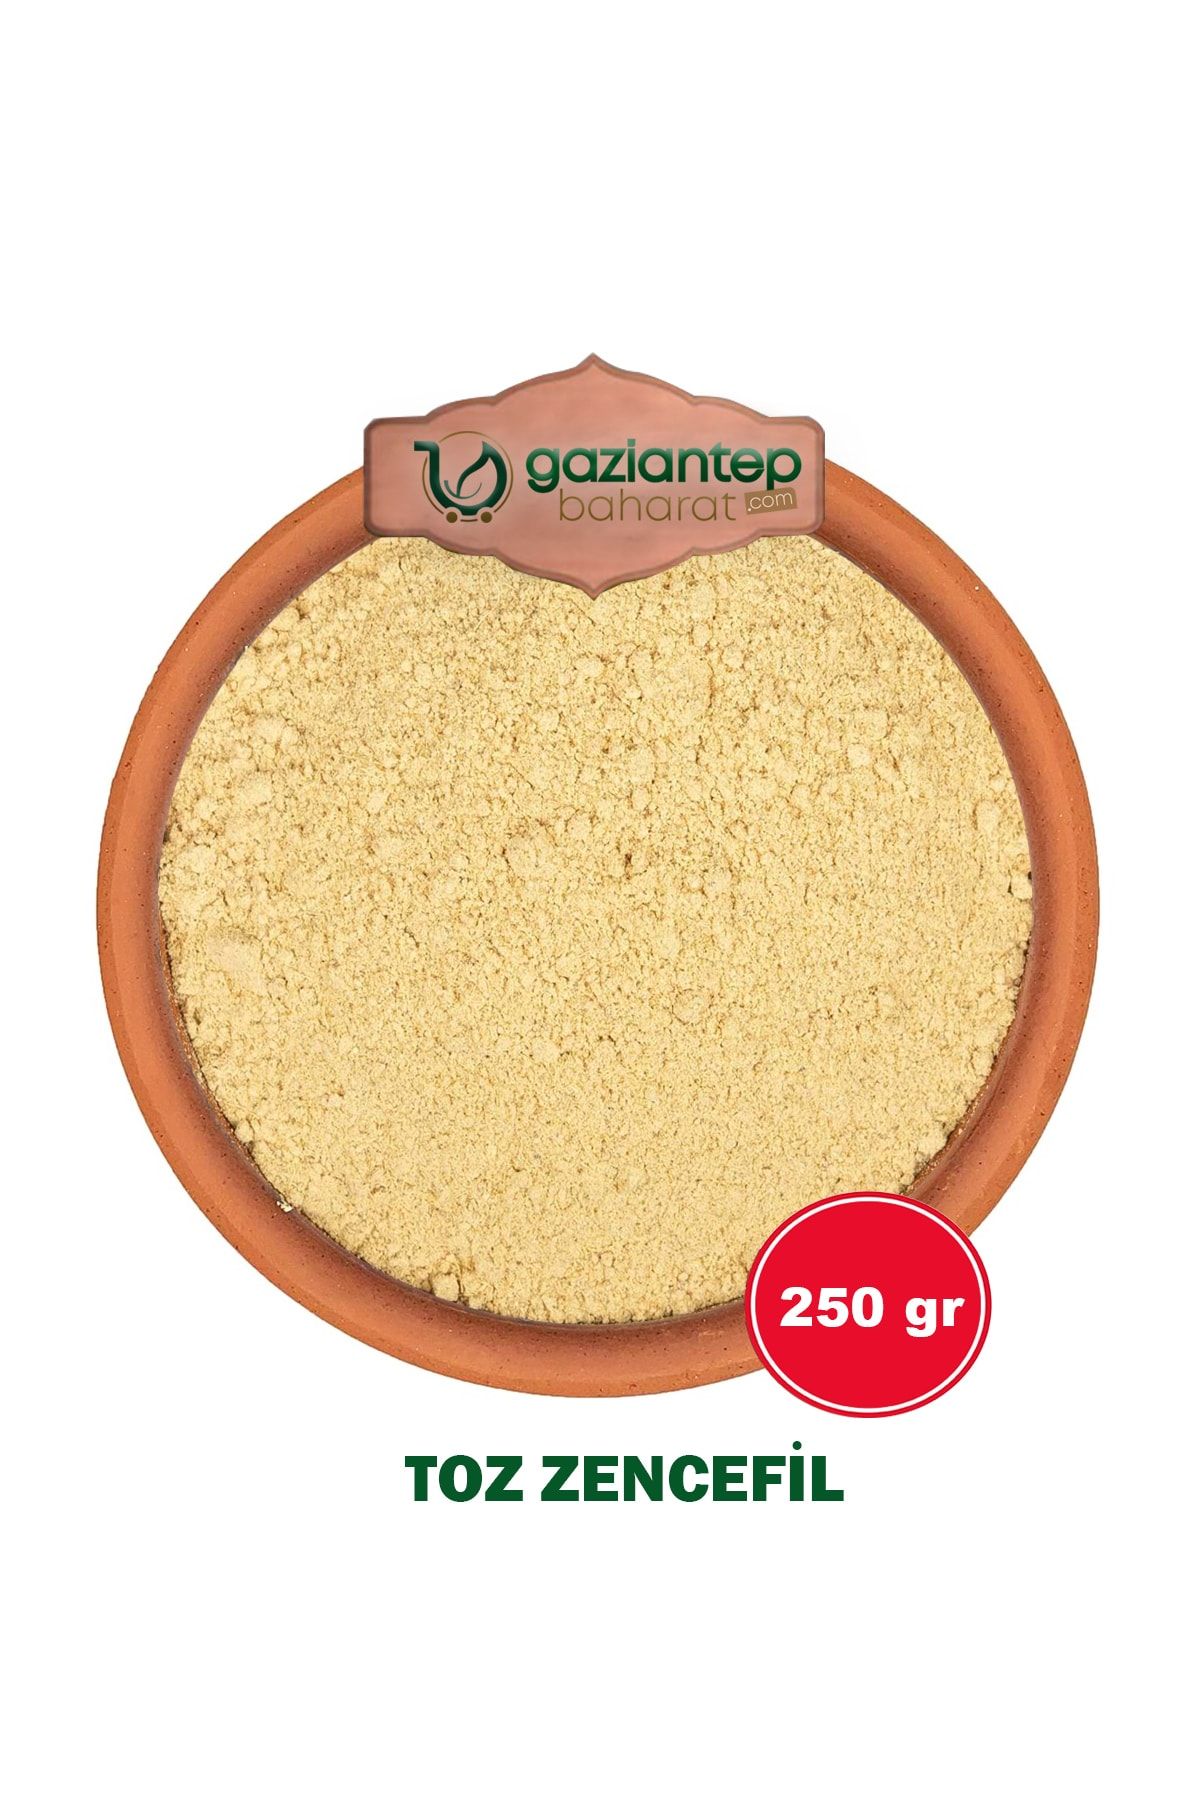 Gaziantep Baharat Zencefil Toz 250 gr